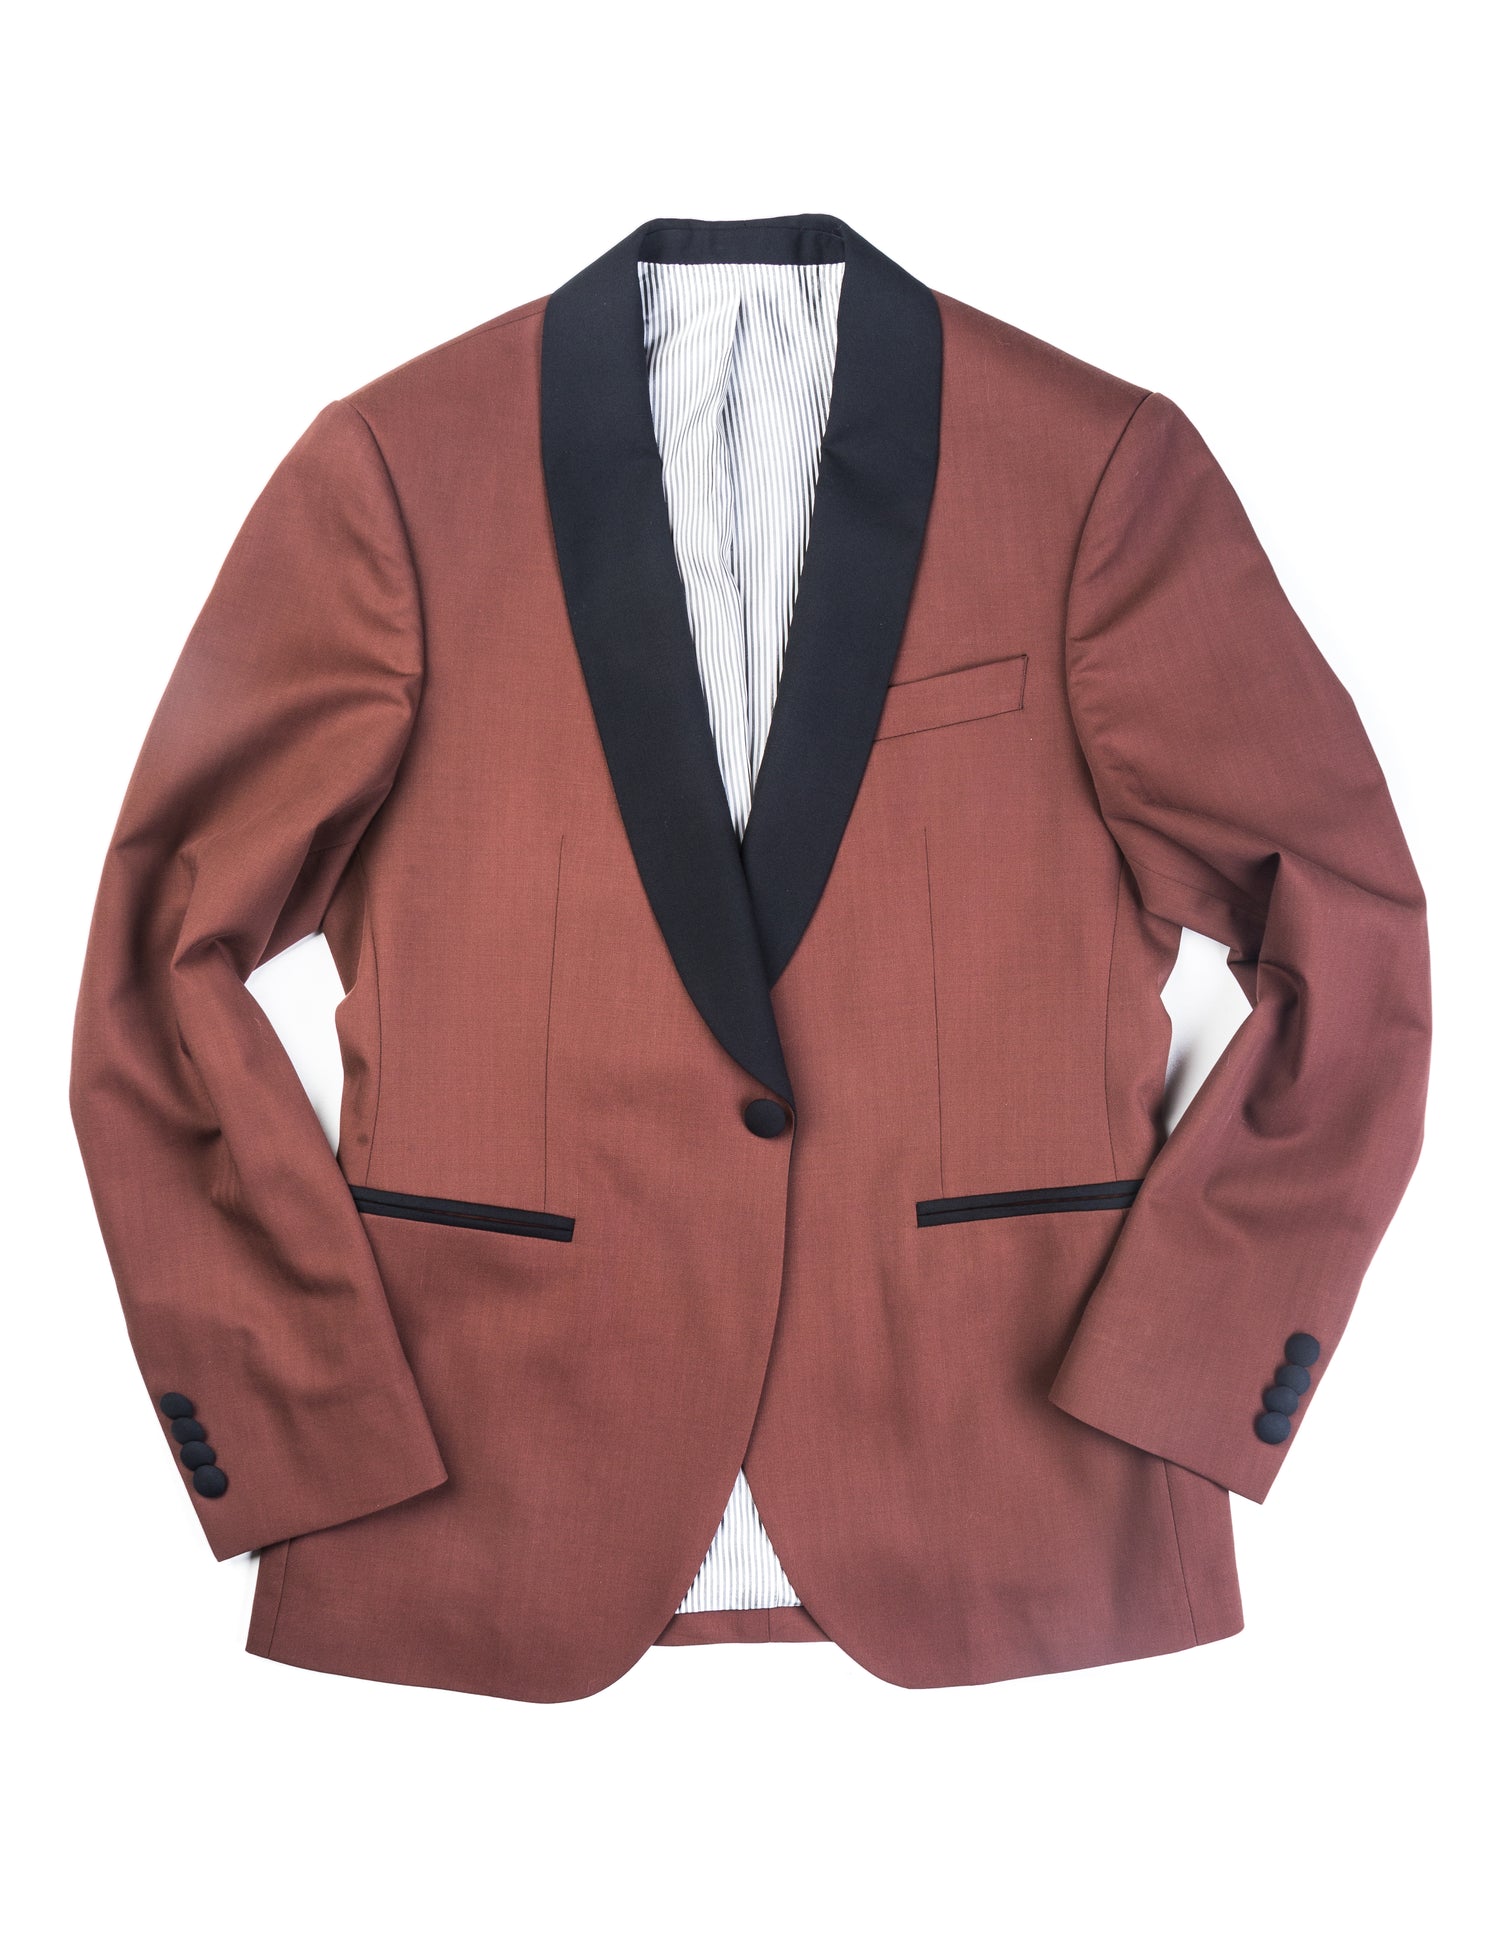 Brooklyn Tailors BKT50 Shawl Collar Dinner Jacket in Herringbone Wool/Cotton - Brick full length flat shot